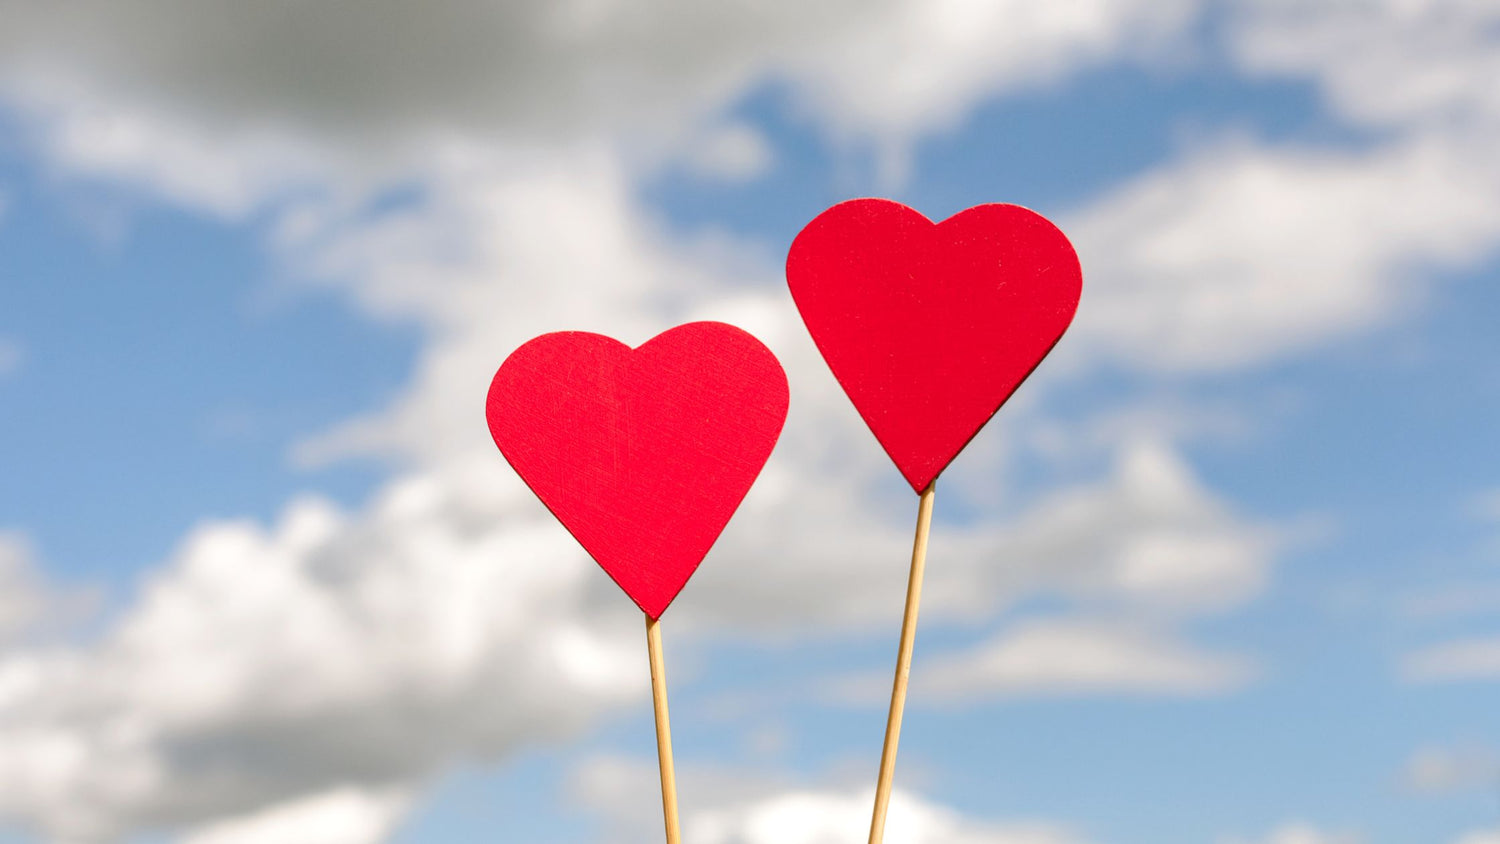 How To Celebrate Valentine's Day: 50+ Romantic & Creative Ideas